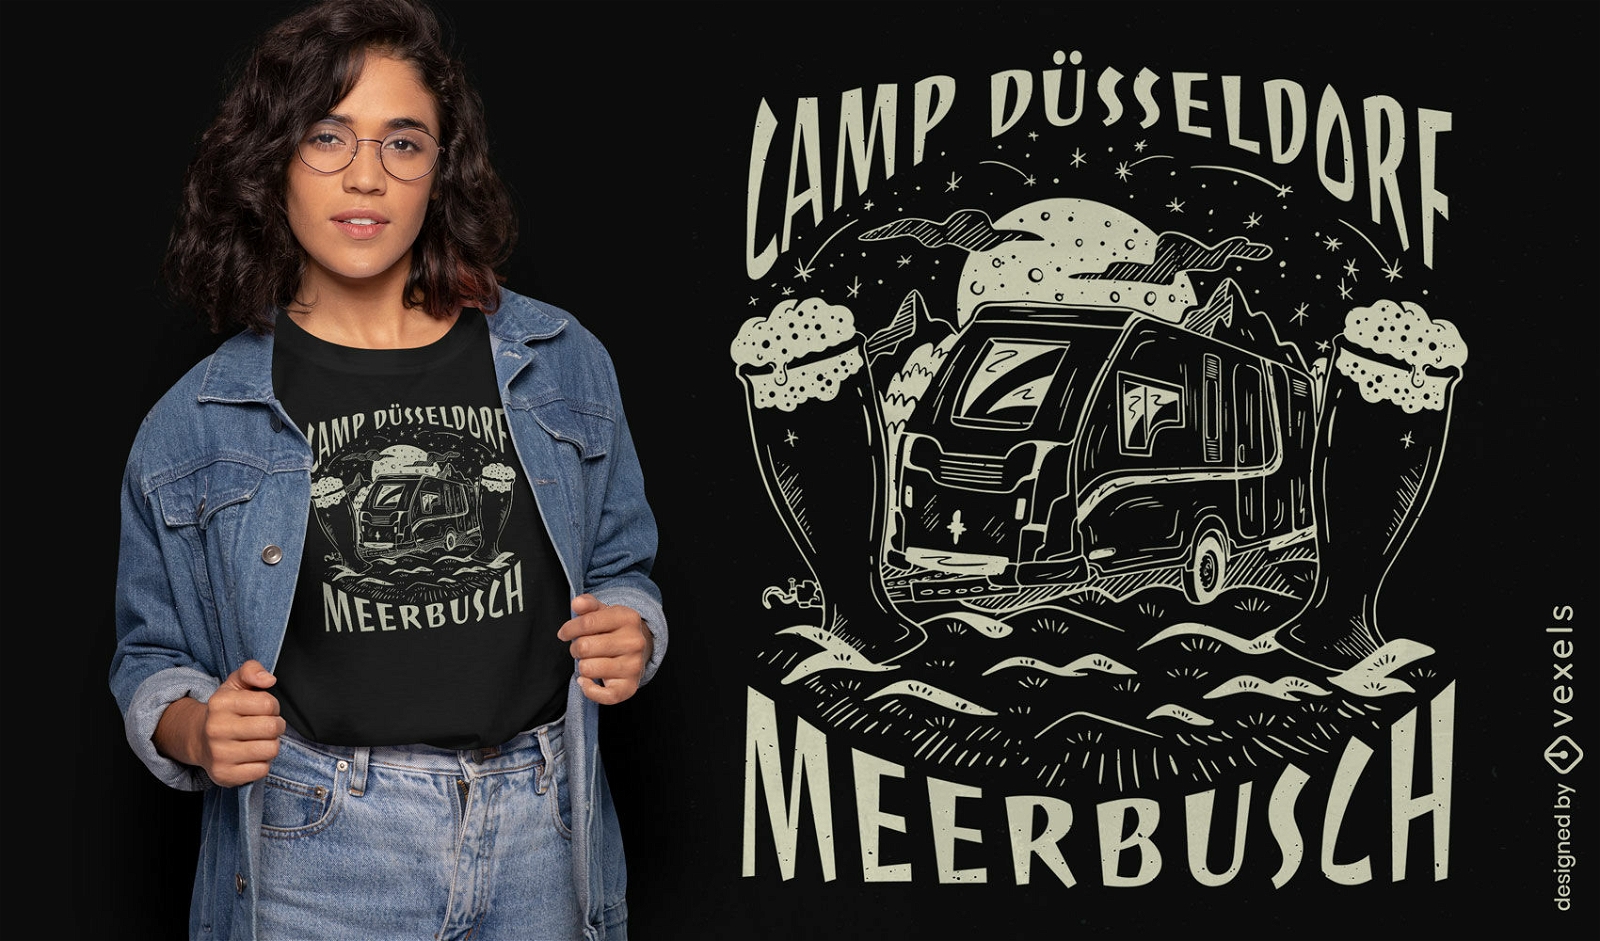 Beer and camping van t-shirt design